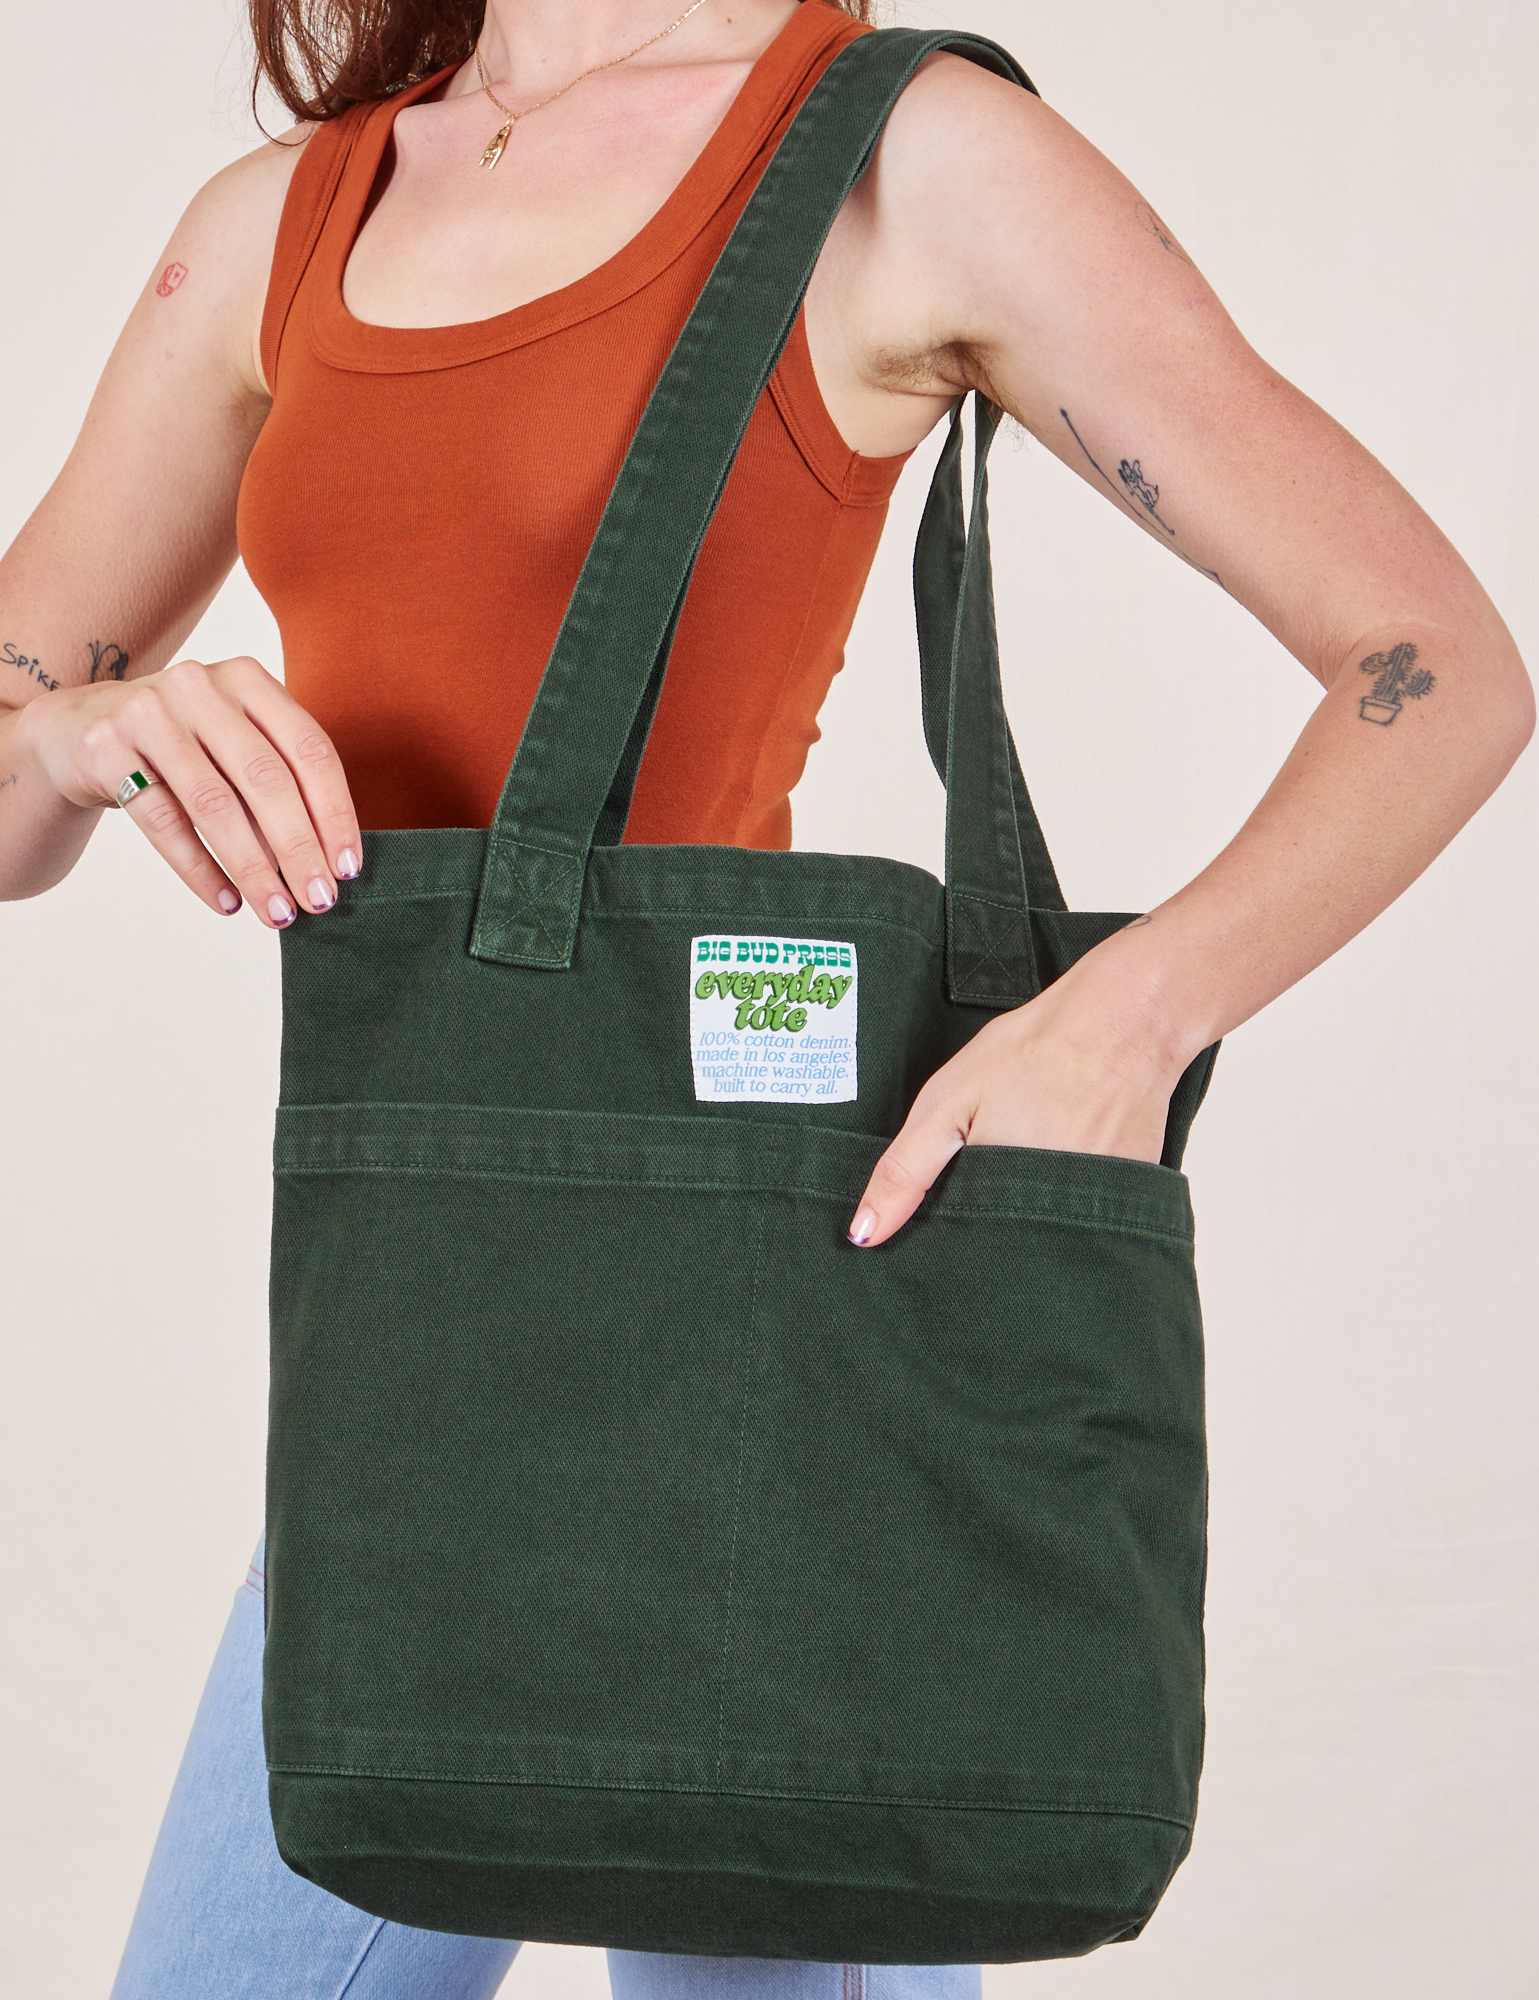 Everyday Tote Bag in Swamp Green worn by model